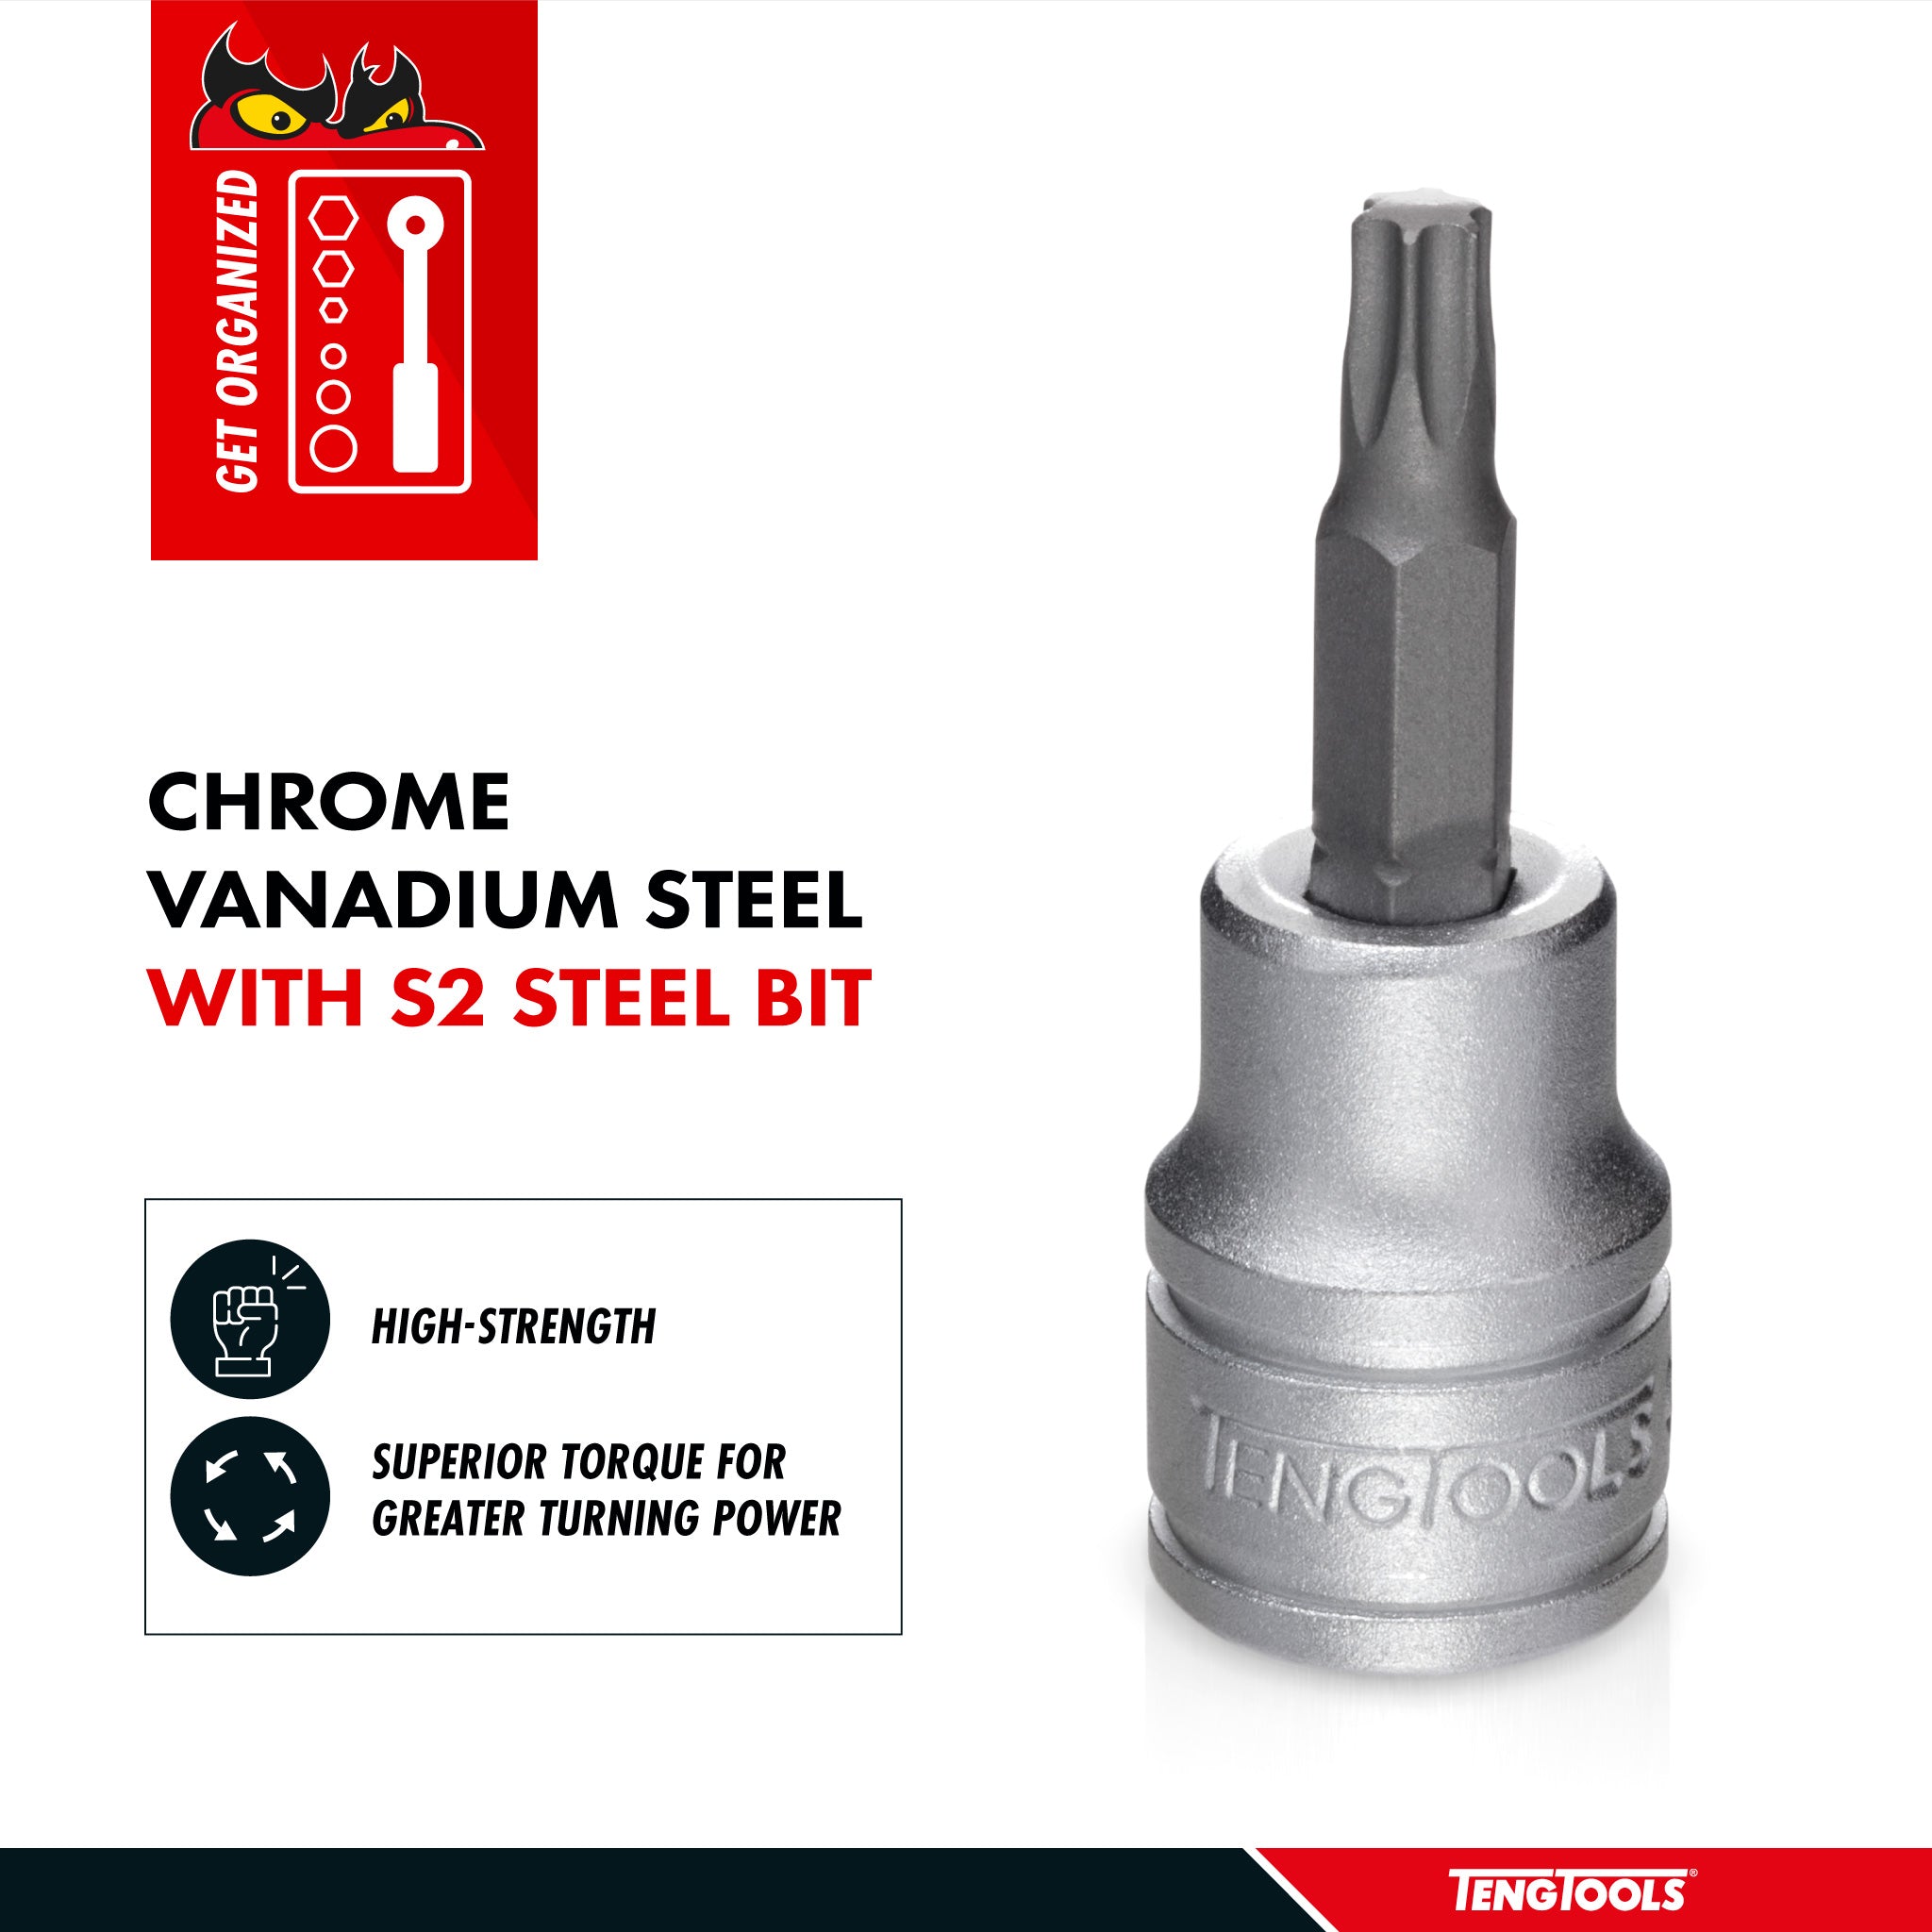 Teng Tools 3/8 Inch Drive Metric Torx TX Chrome Vanadium Sockets - TX20